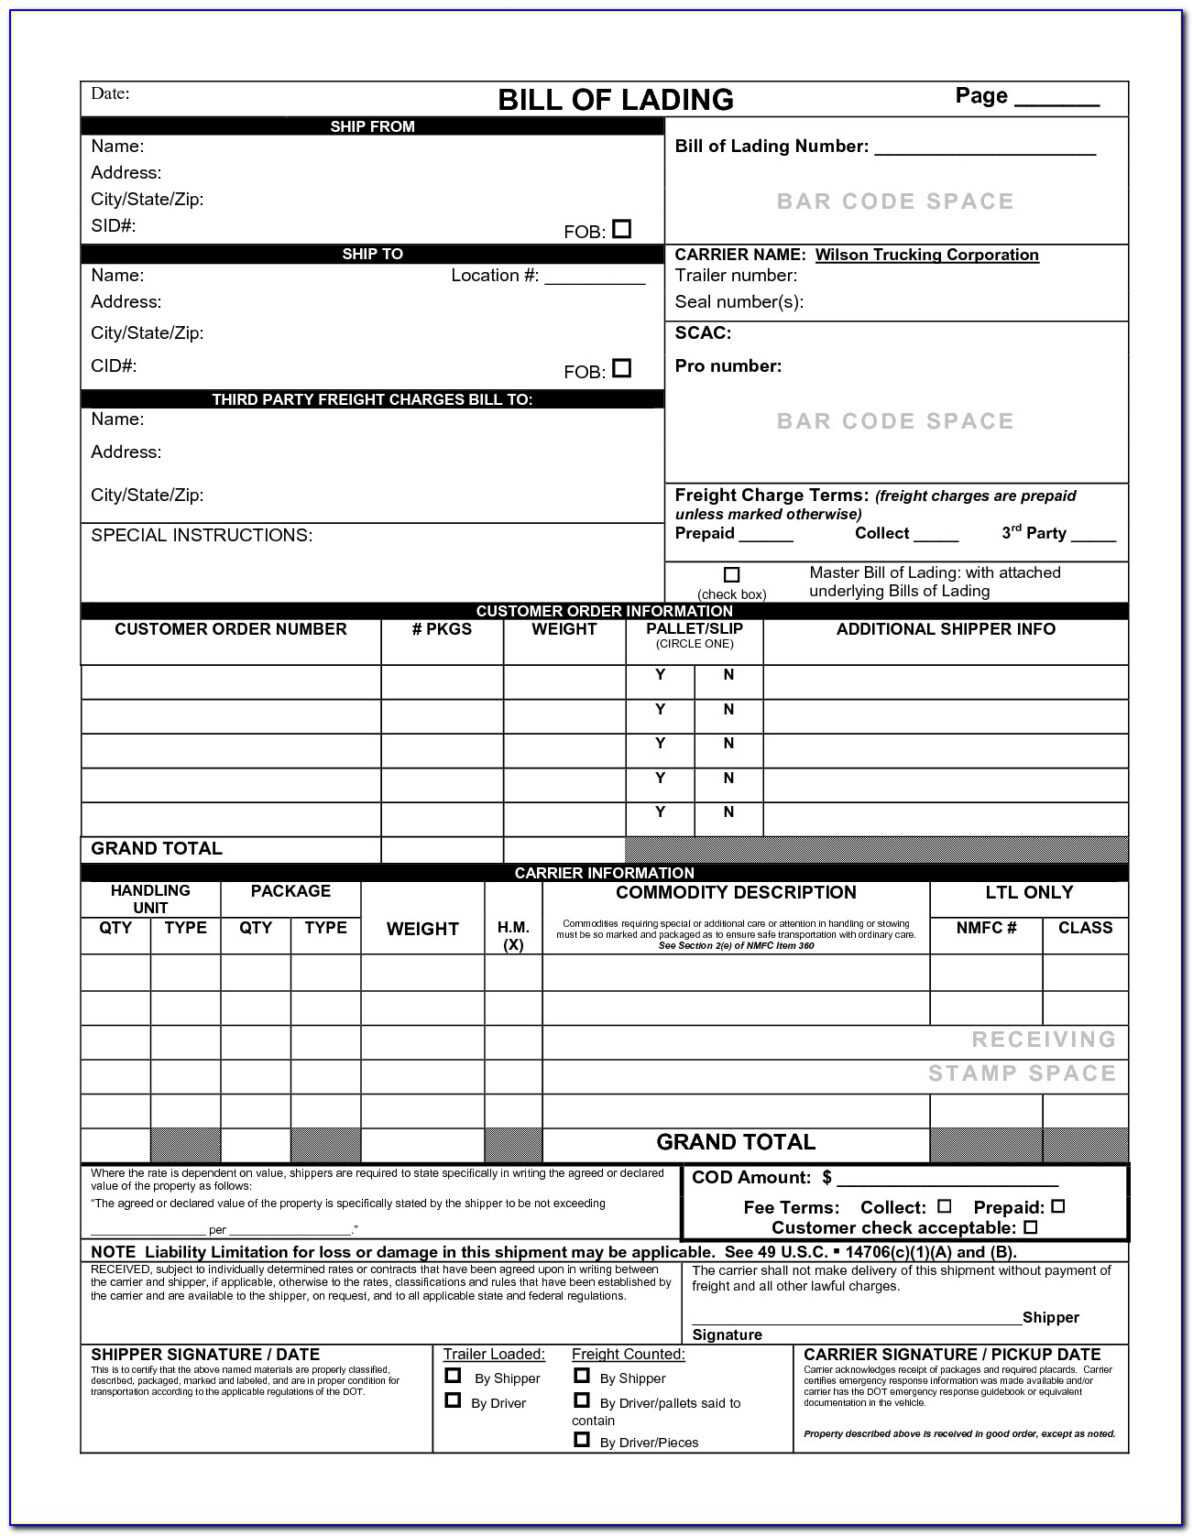 blank-bill-of-lading-short-form-pdf-form-resume-examples-76ygeap2ol